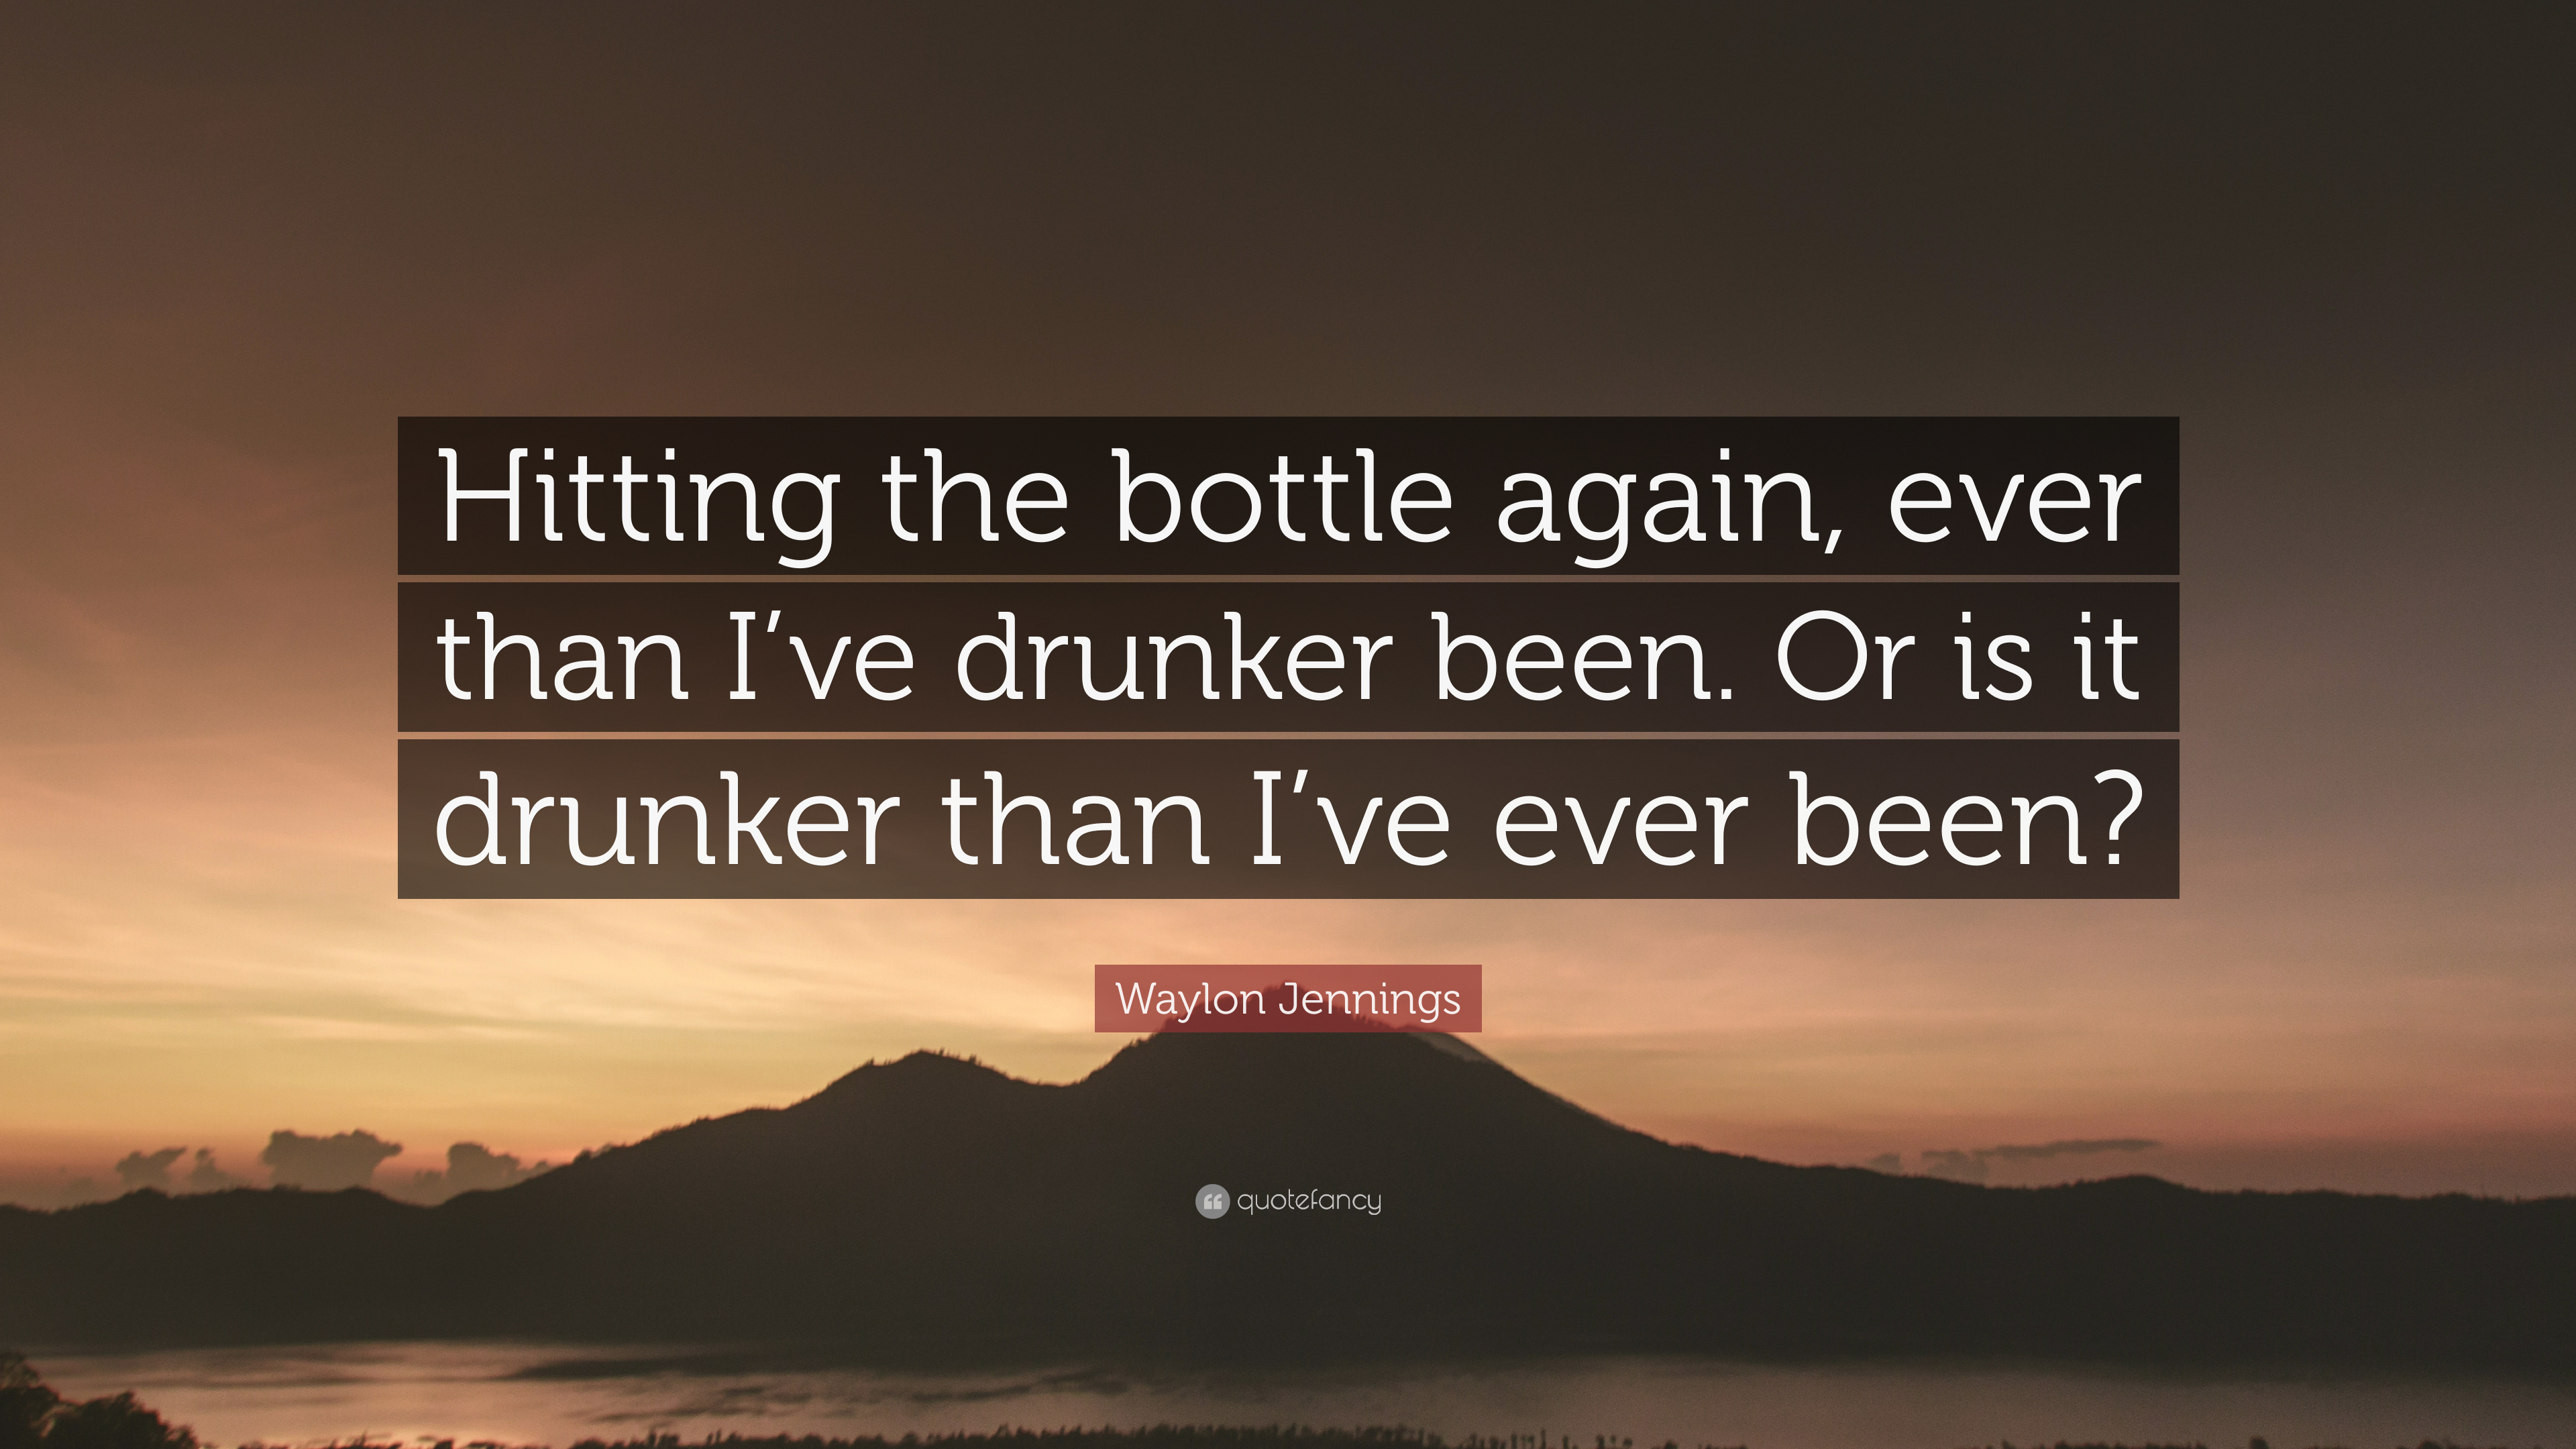 Waylon Jennings Quote: “Hitting the bottle again, ever than I've